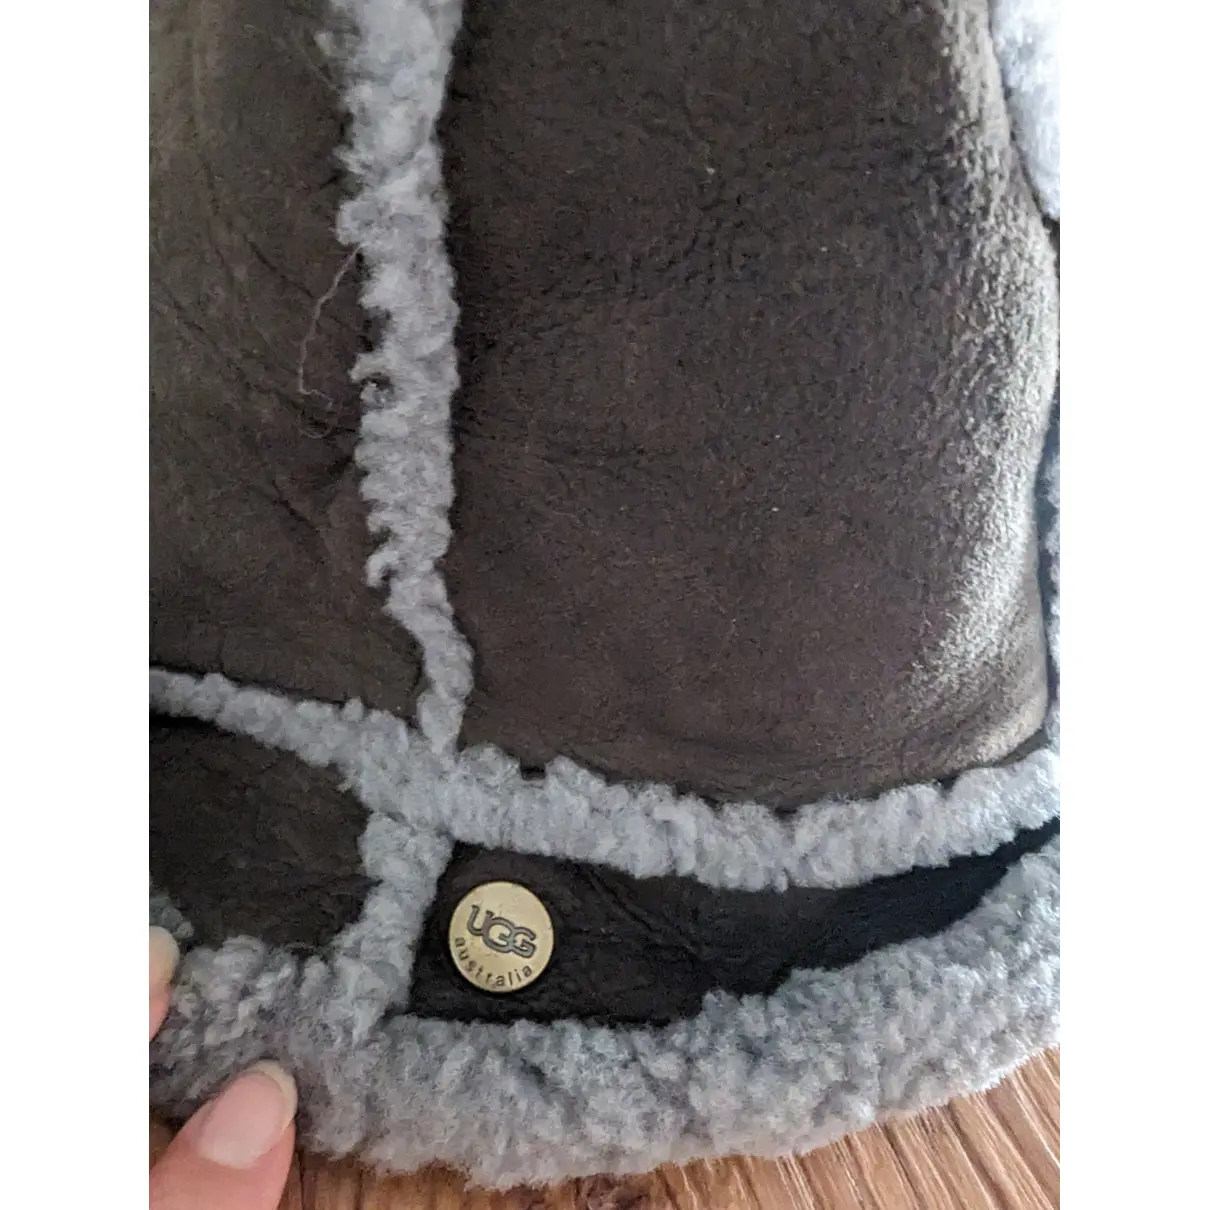 Leather hat Ugg